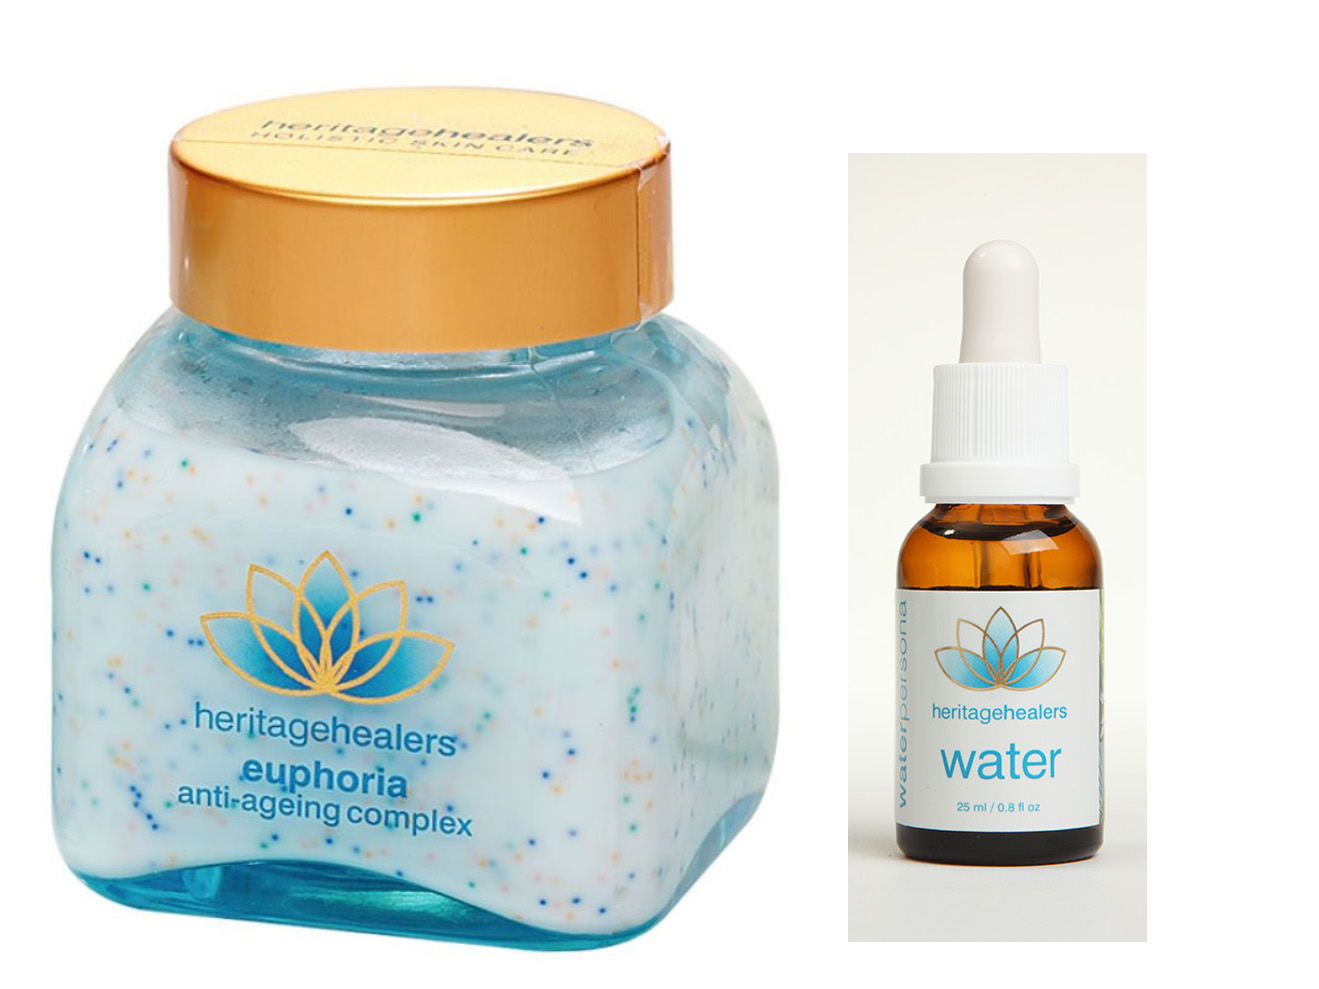 Heritage Healers Water Wildflower Essence Remedy